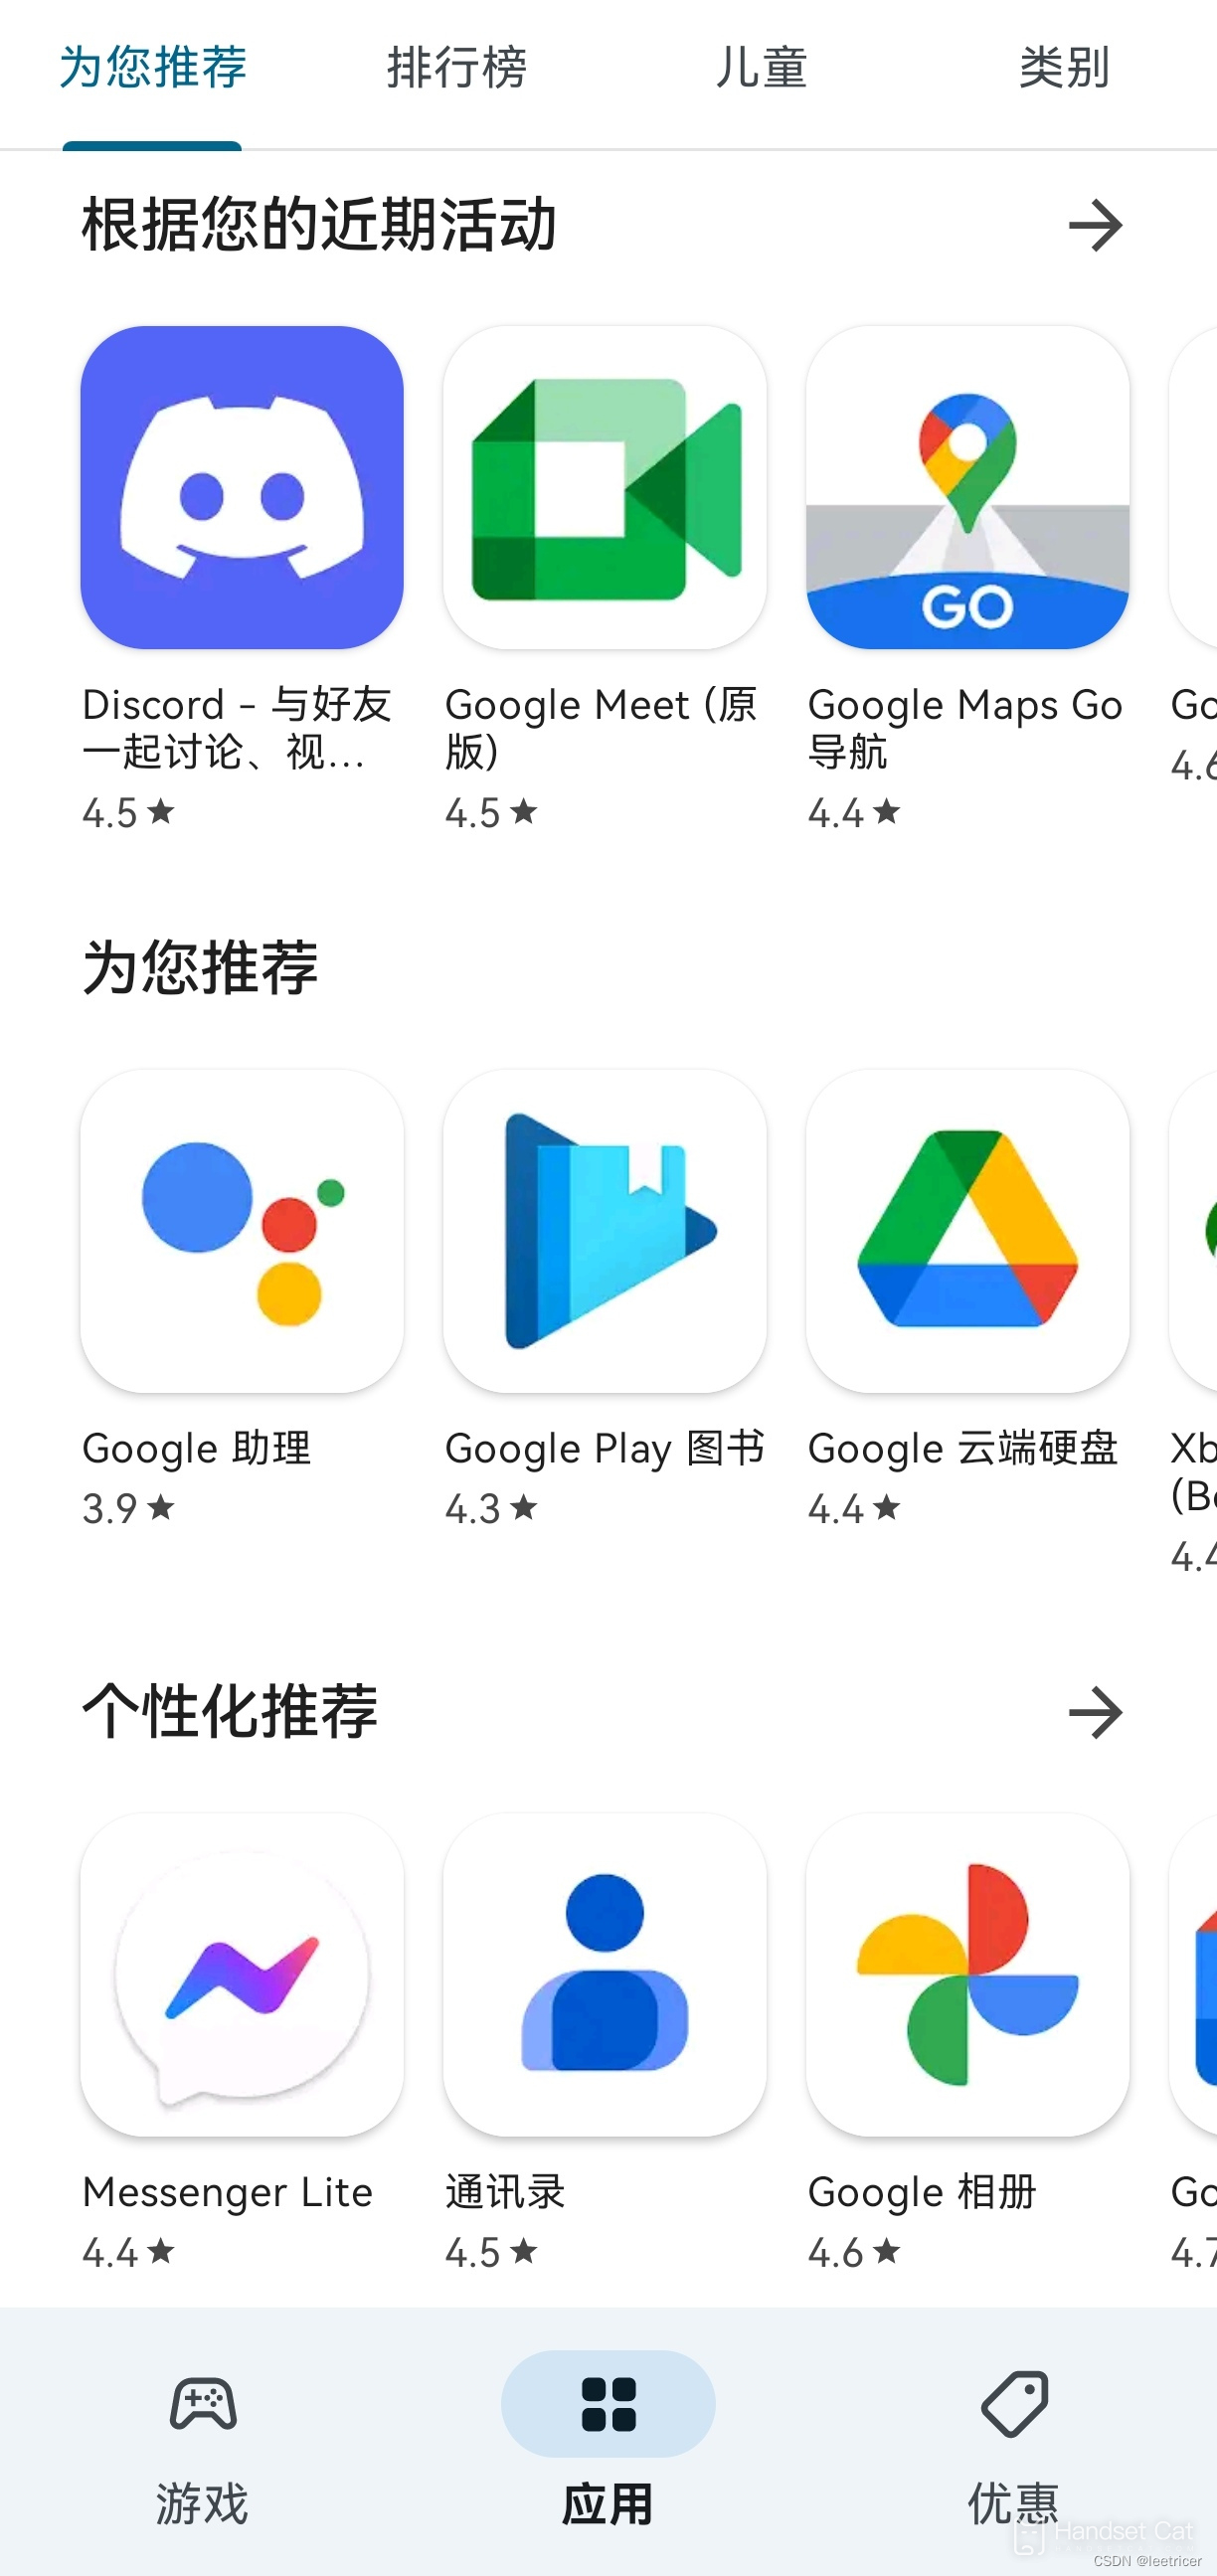 Tutoriel Google d'installation de Hongmeng 3.0